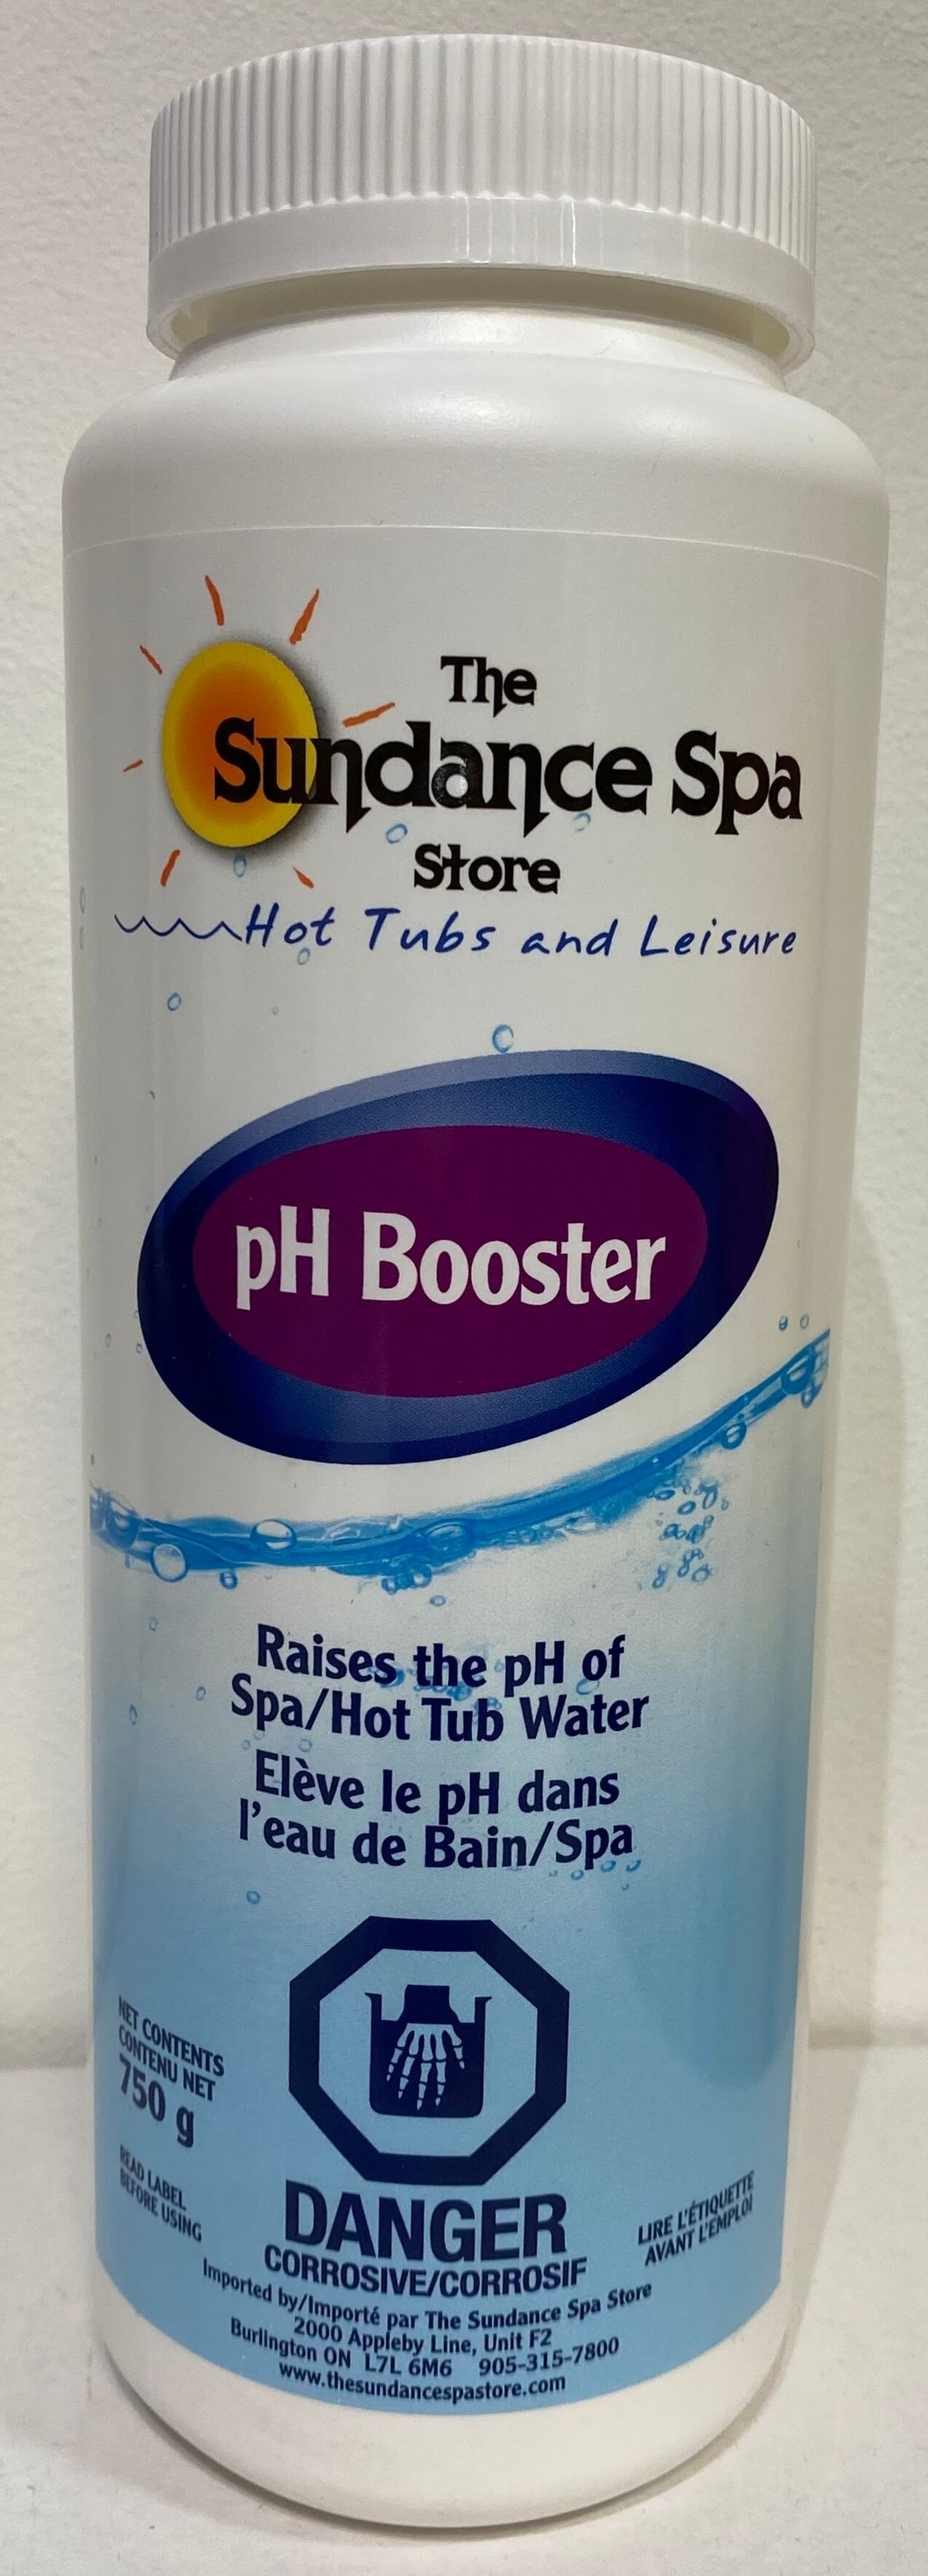 pH Booster - 750g